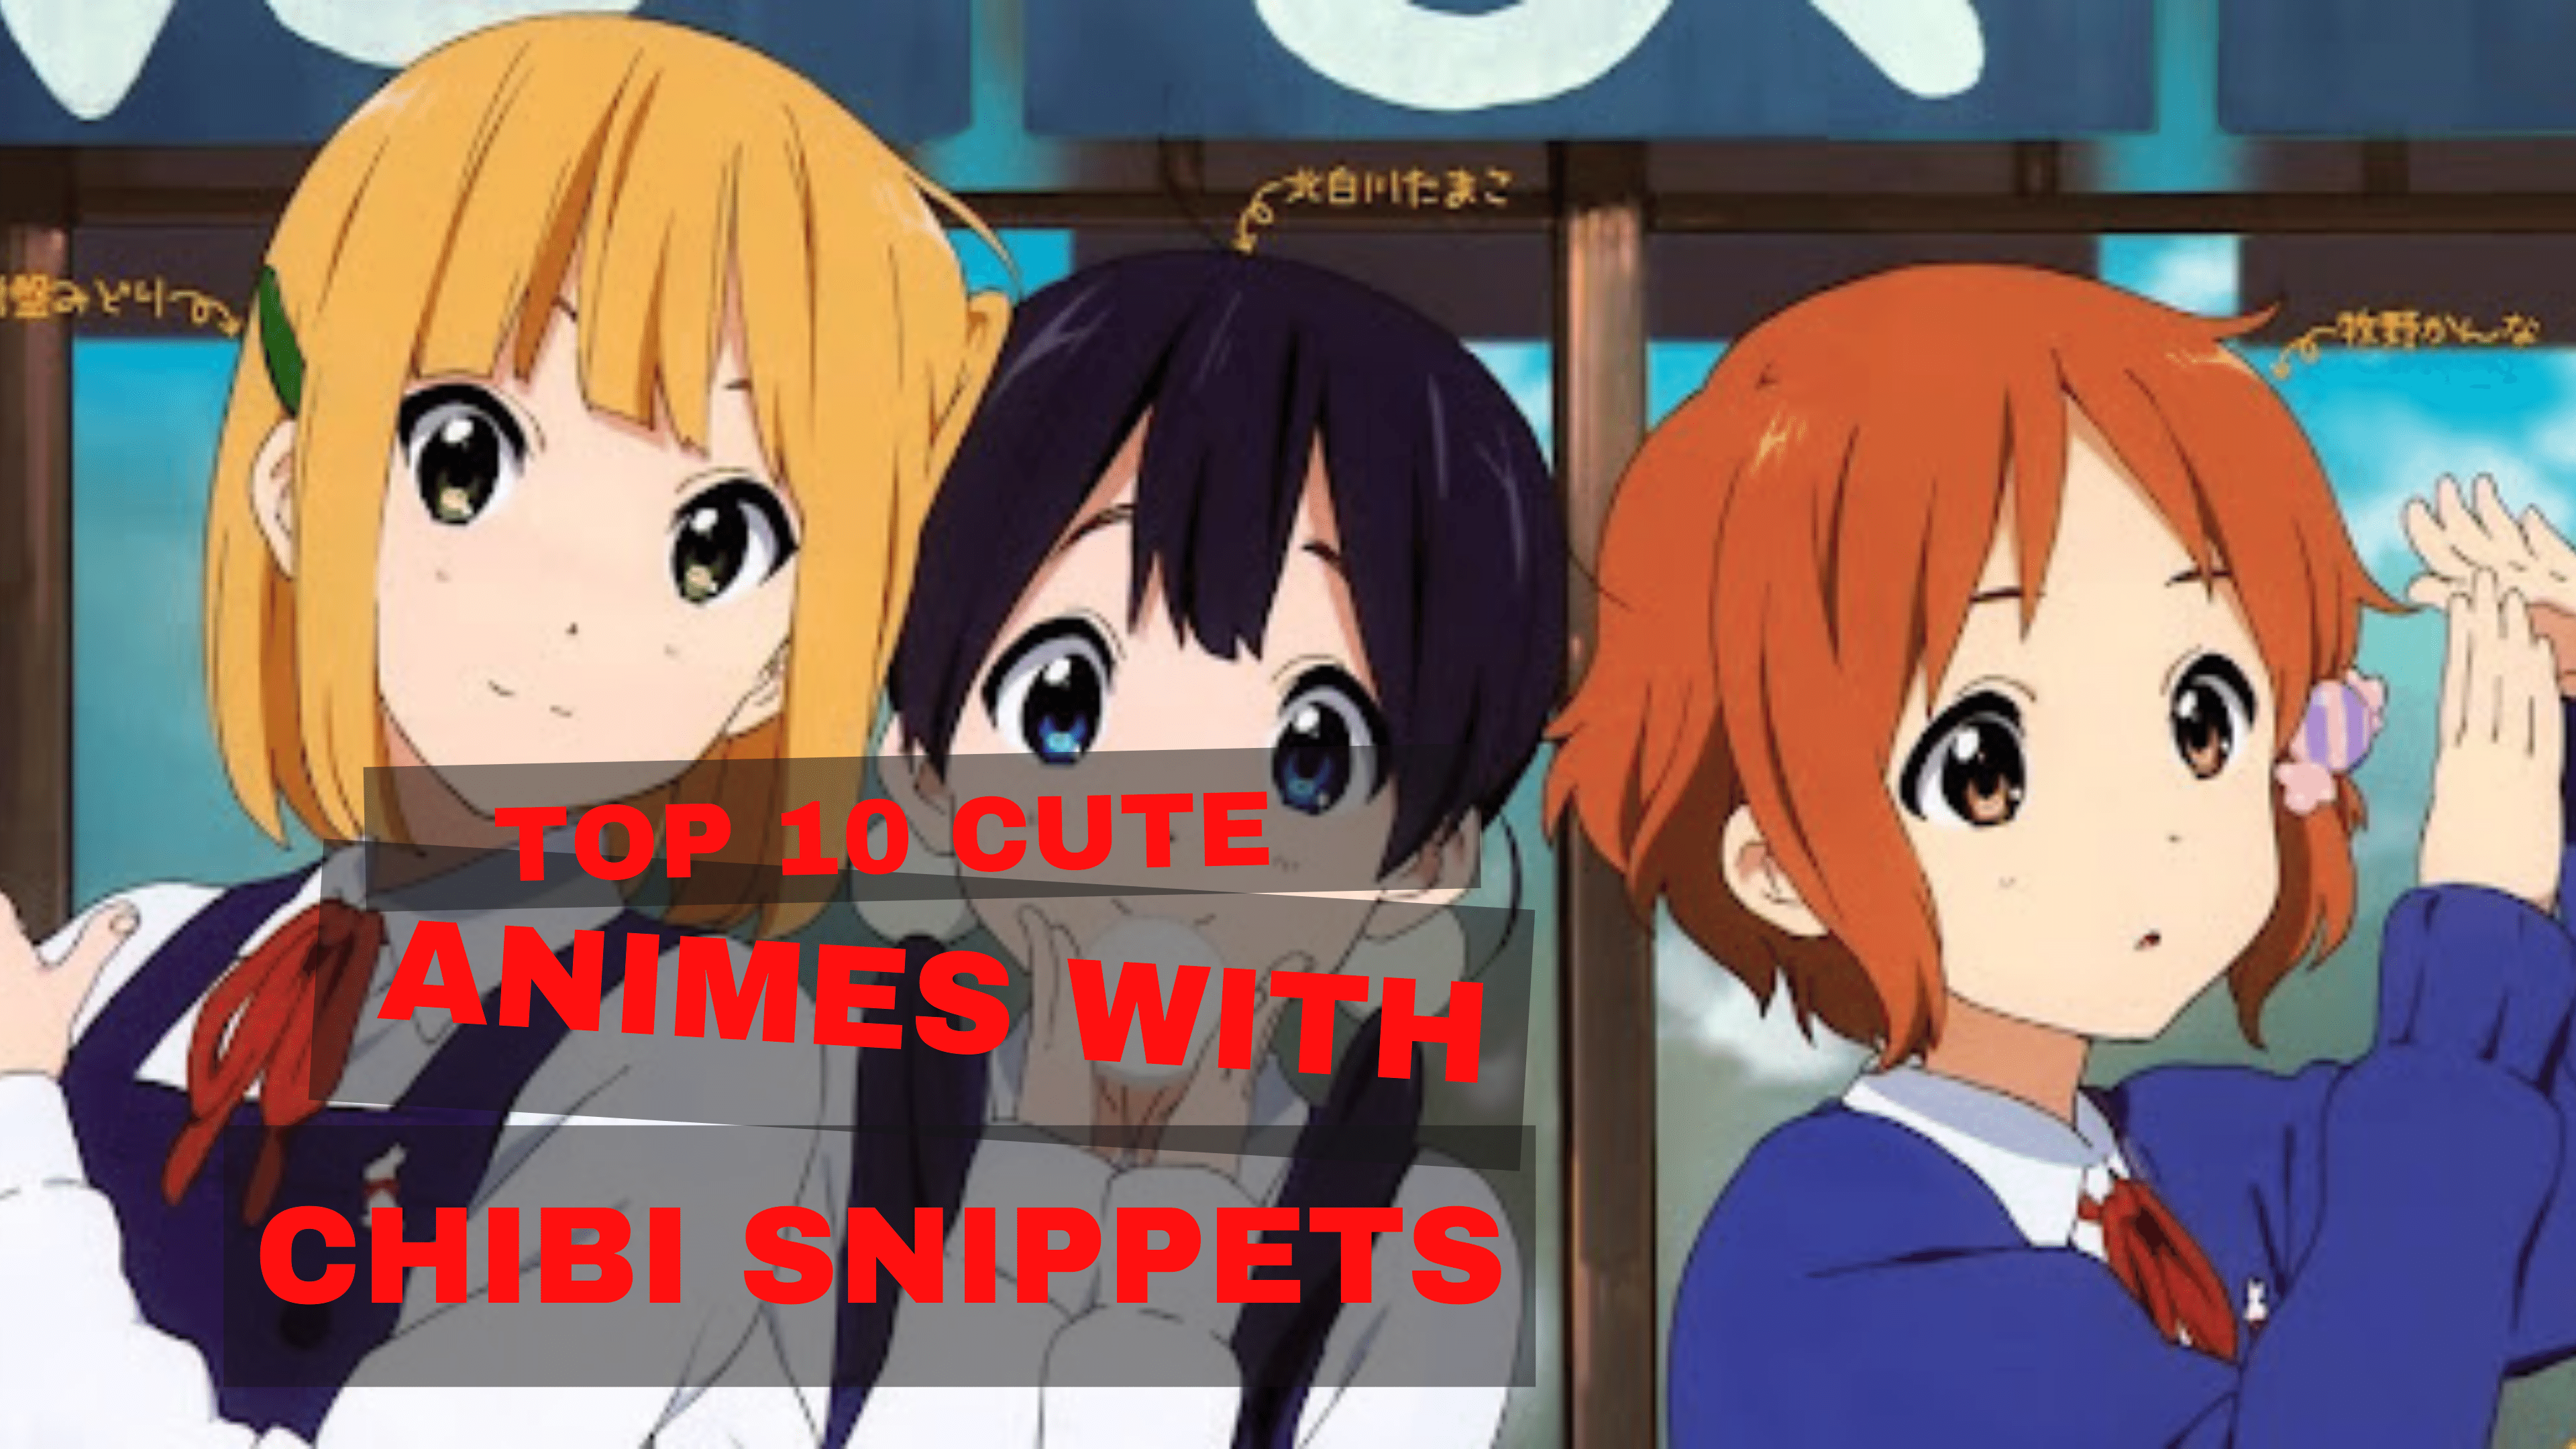 Top 10 Cute Animes with Chibi Snippets | Otaku Fanatic